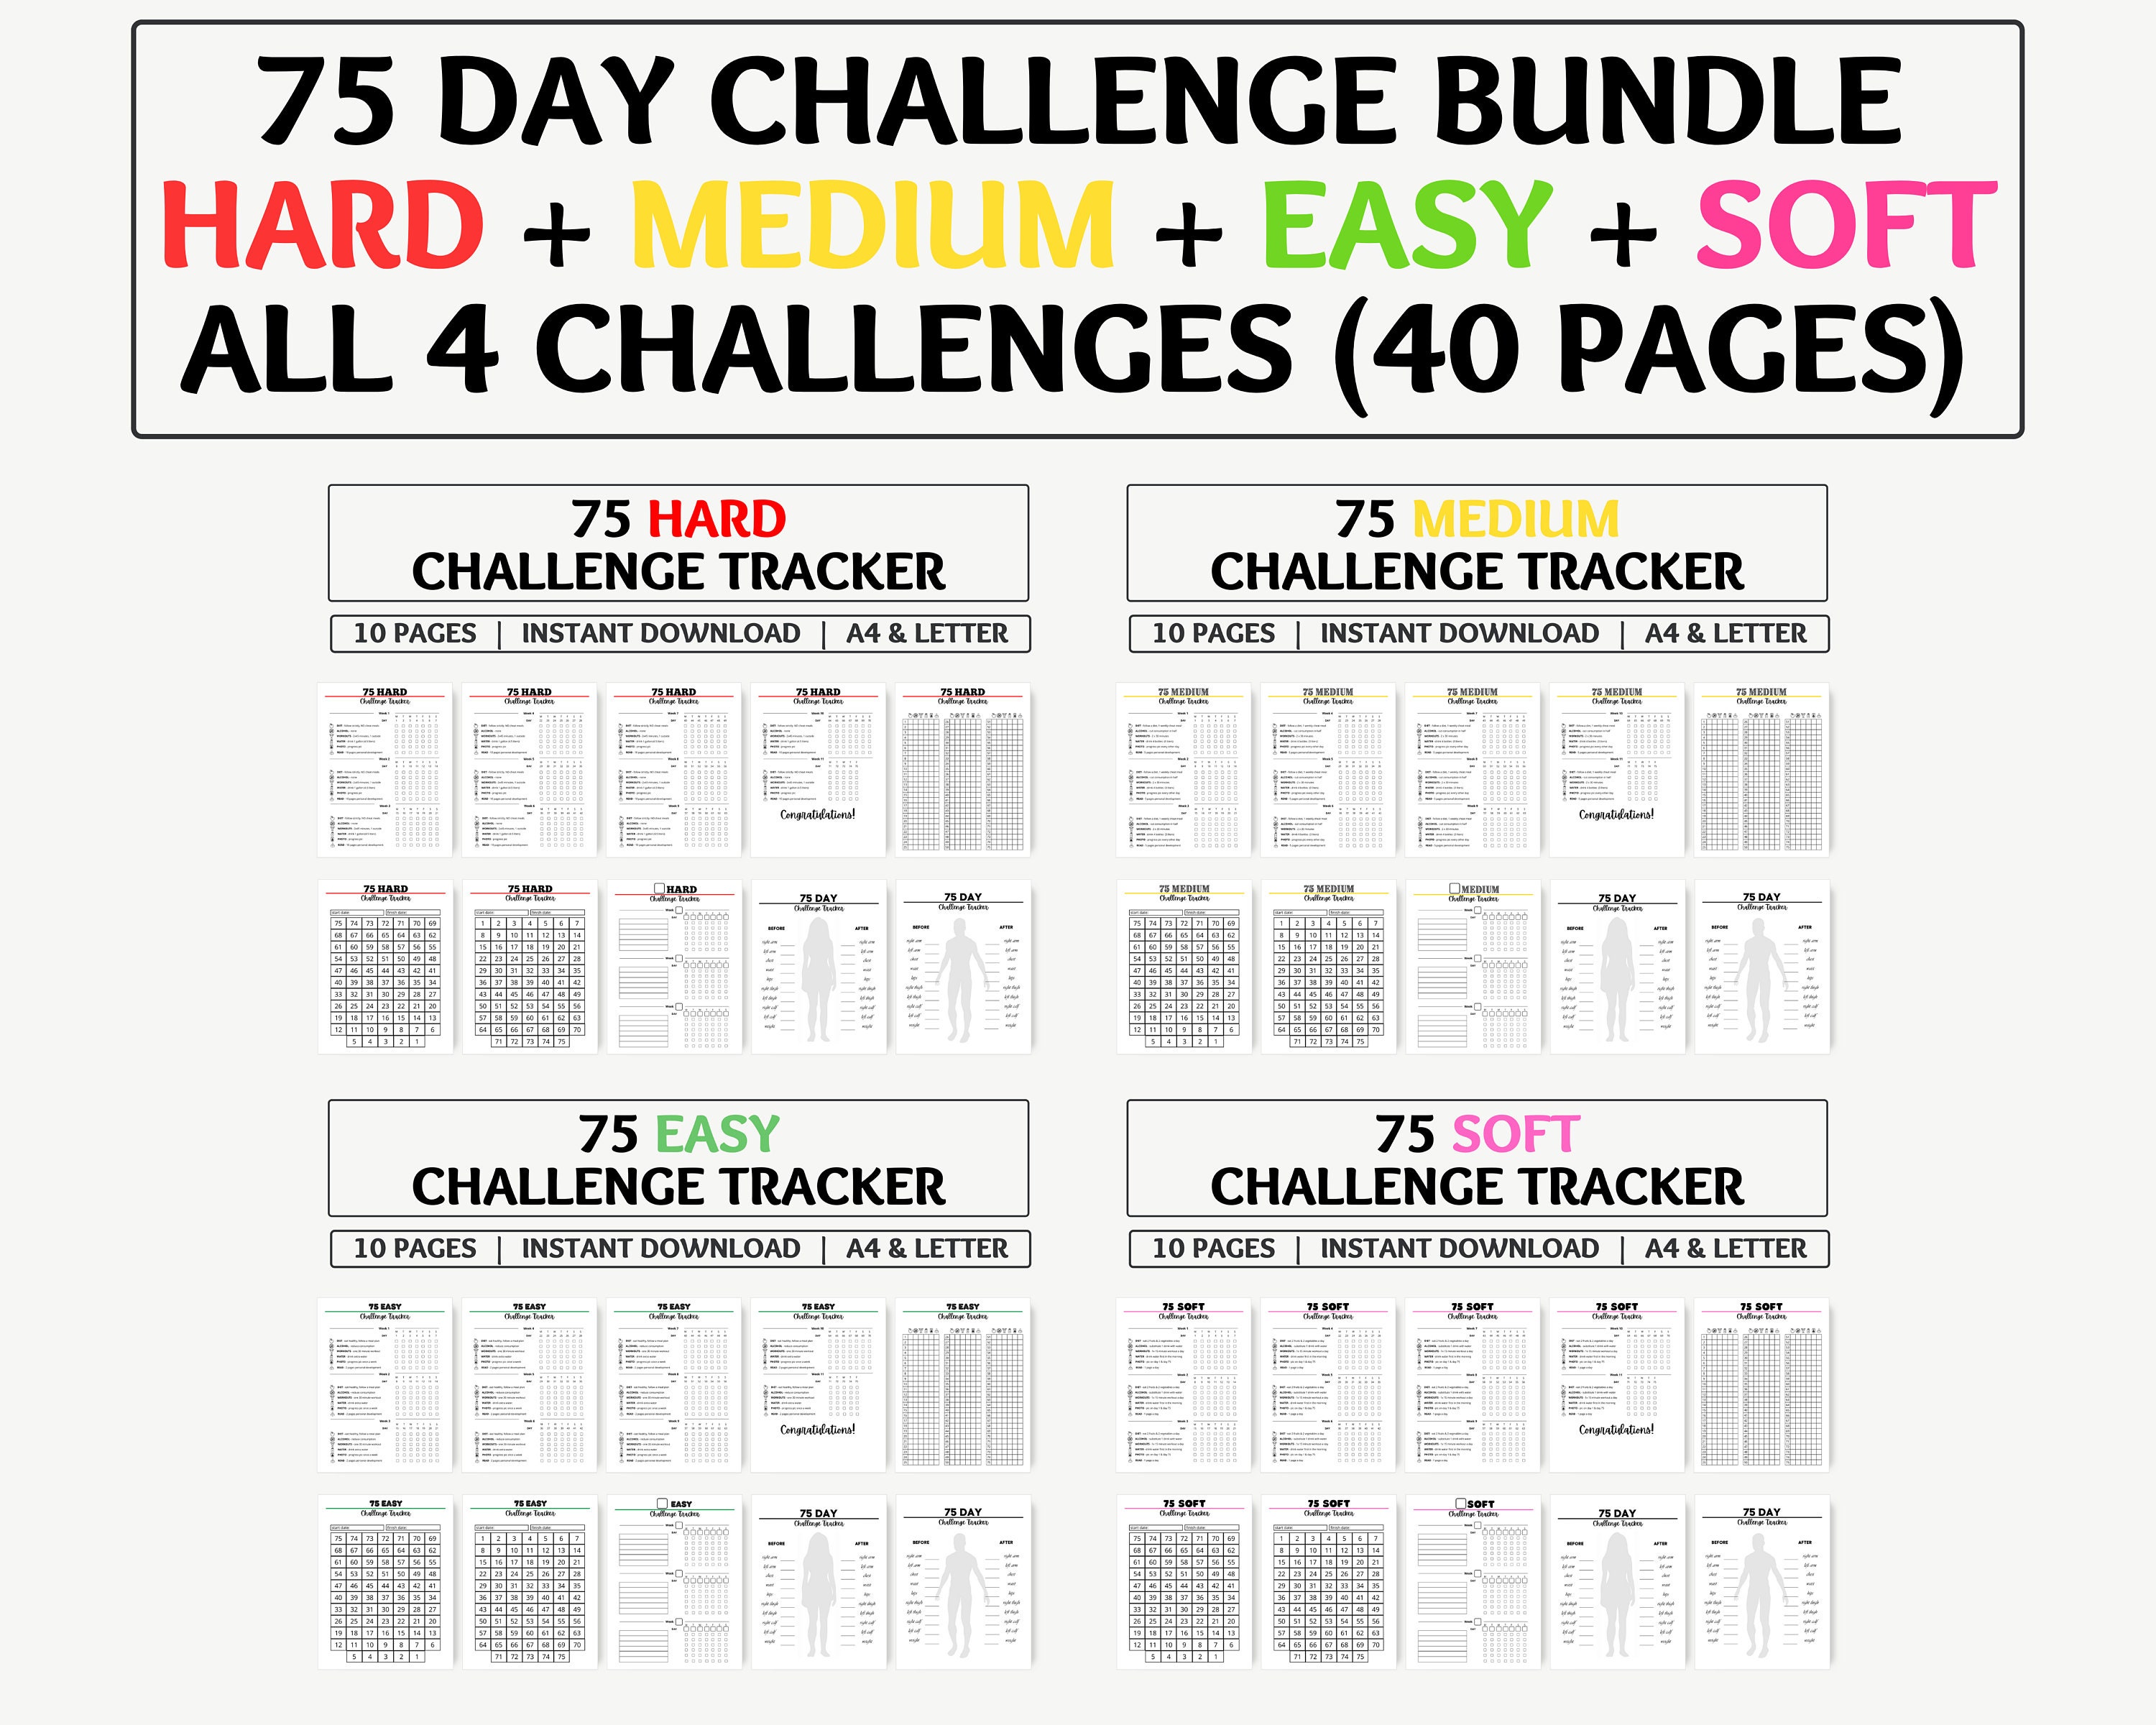 printable-75-hard-challenge-habit-tracker-checklist-calendar